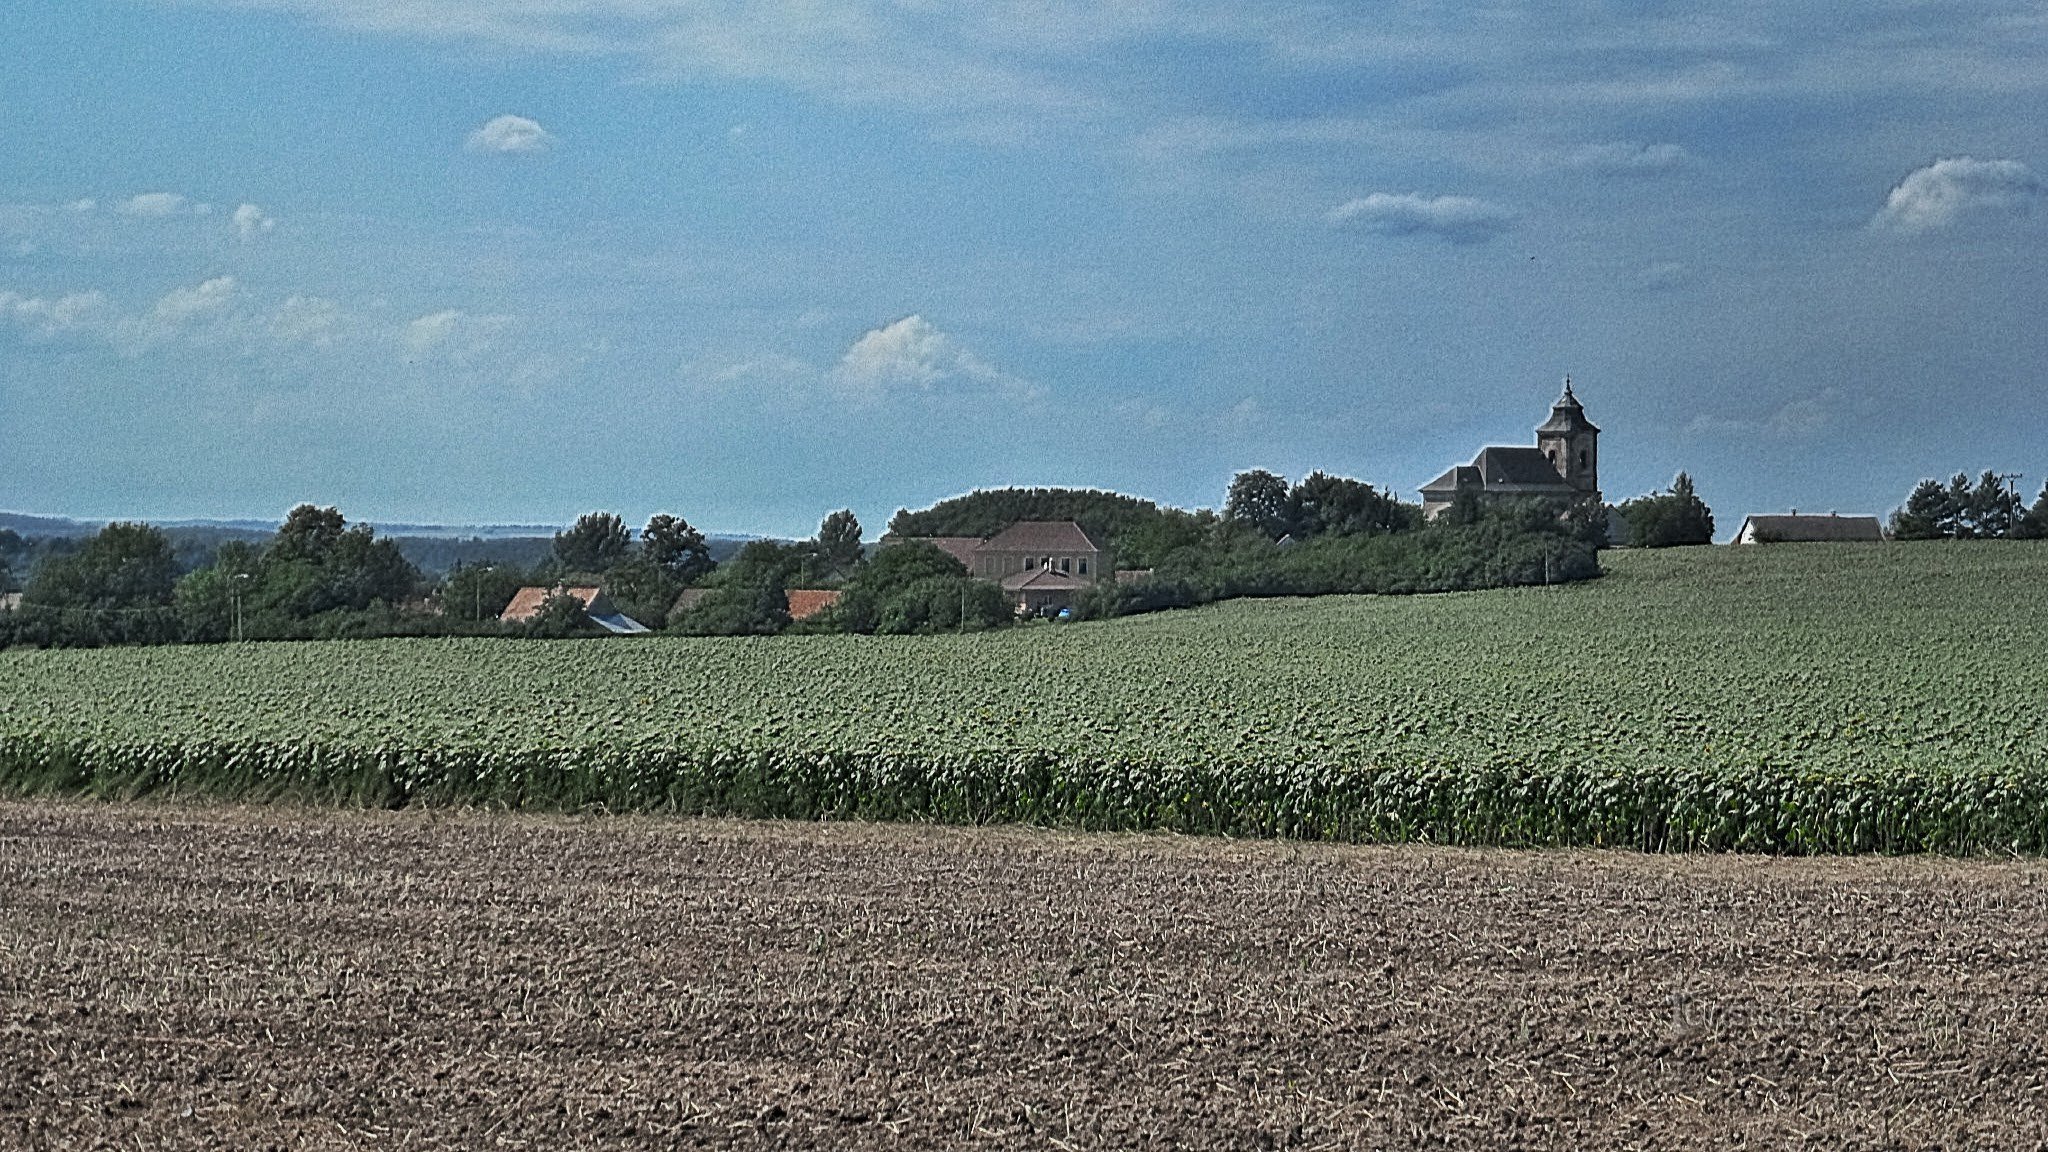 Podhořany-Dolní bučice道路からの村の眺め